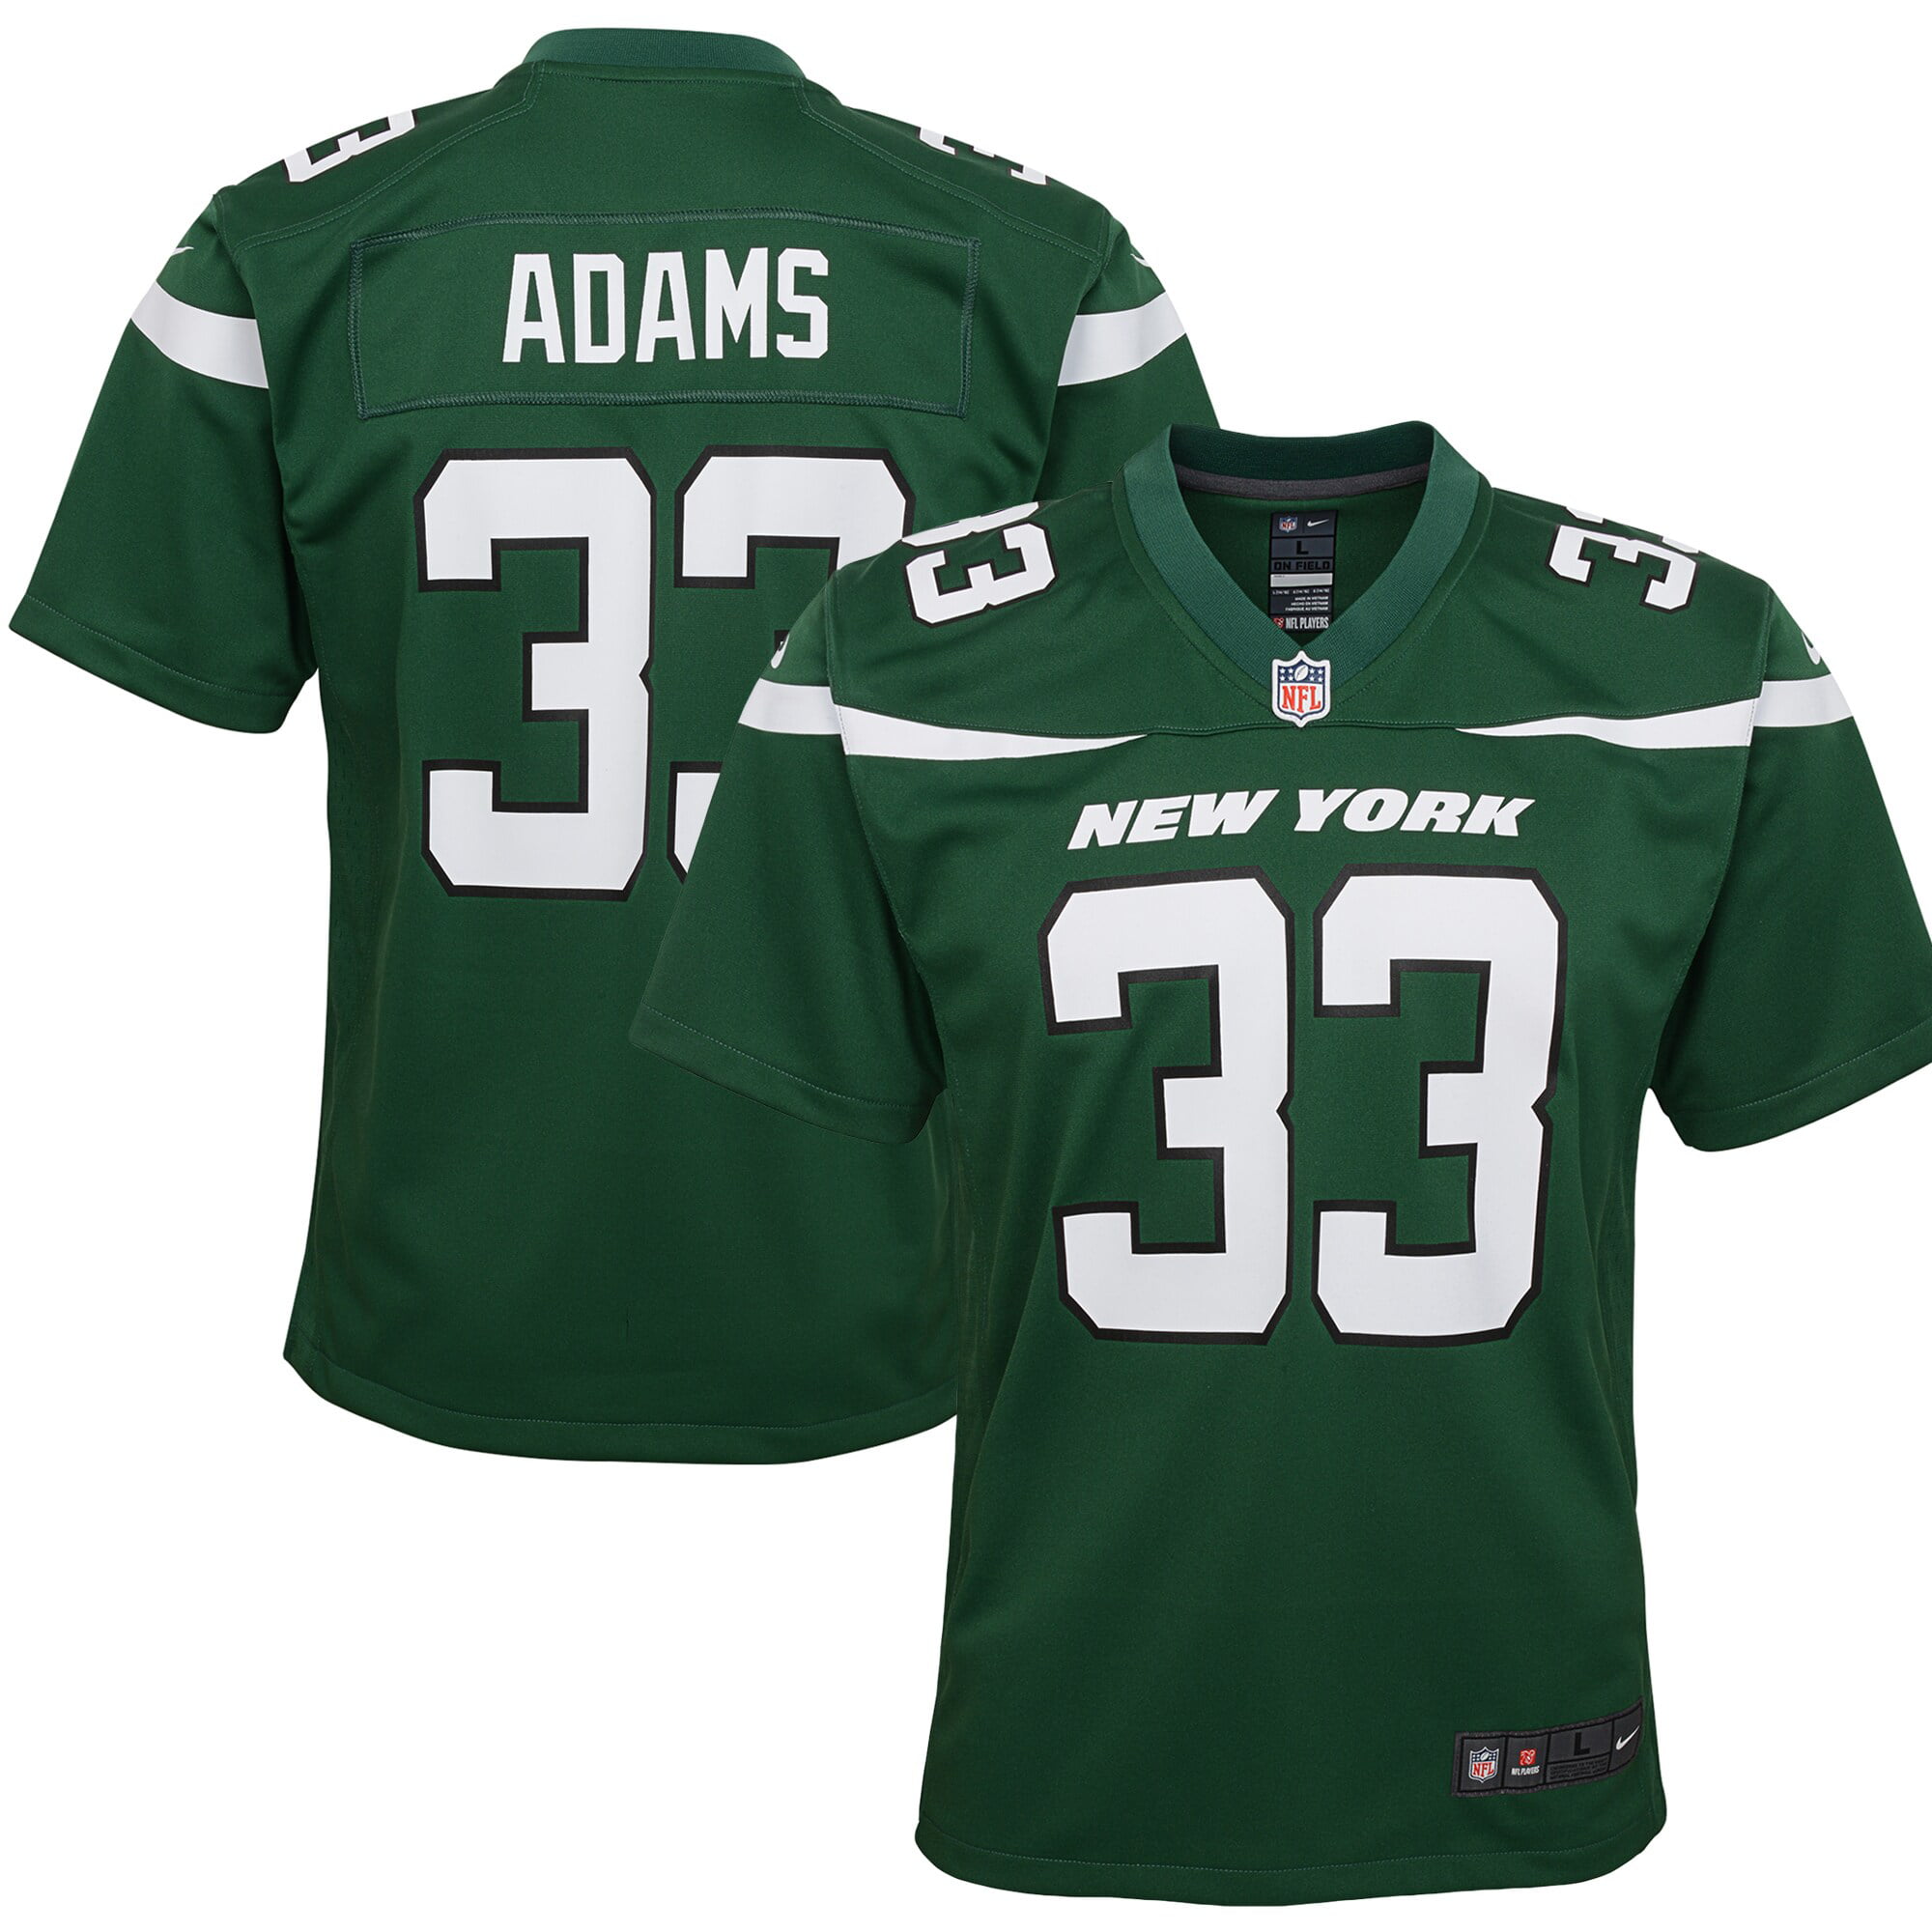 Jamal Adams New York Jets Nike Youth Game Jersey - Gotham Green - Walmart.com ...